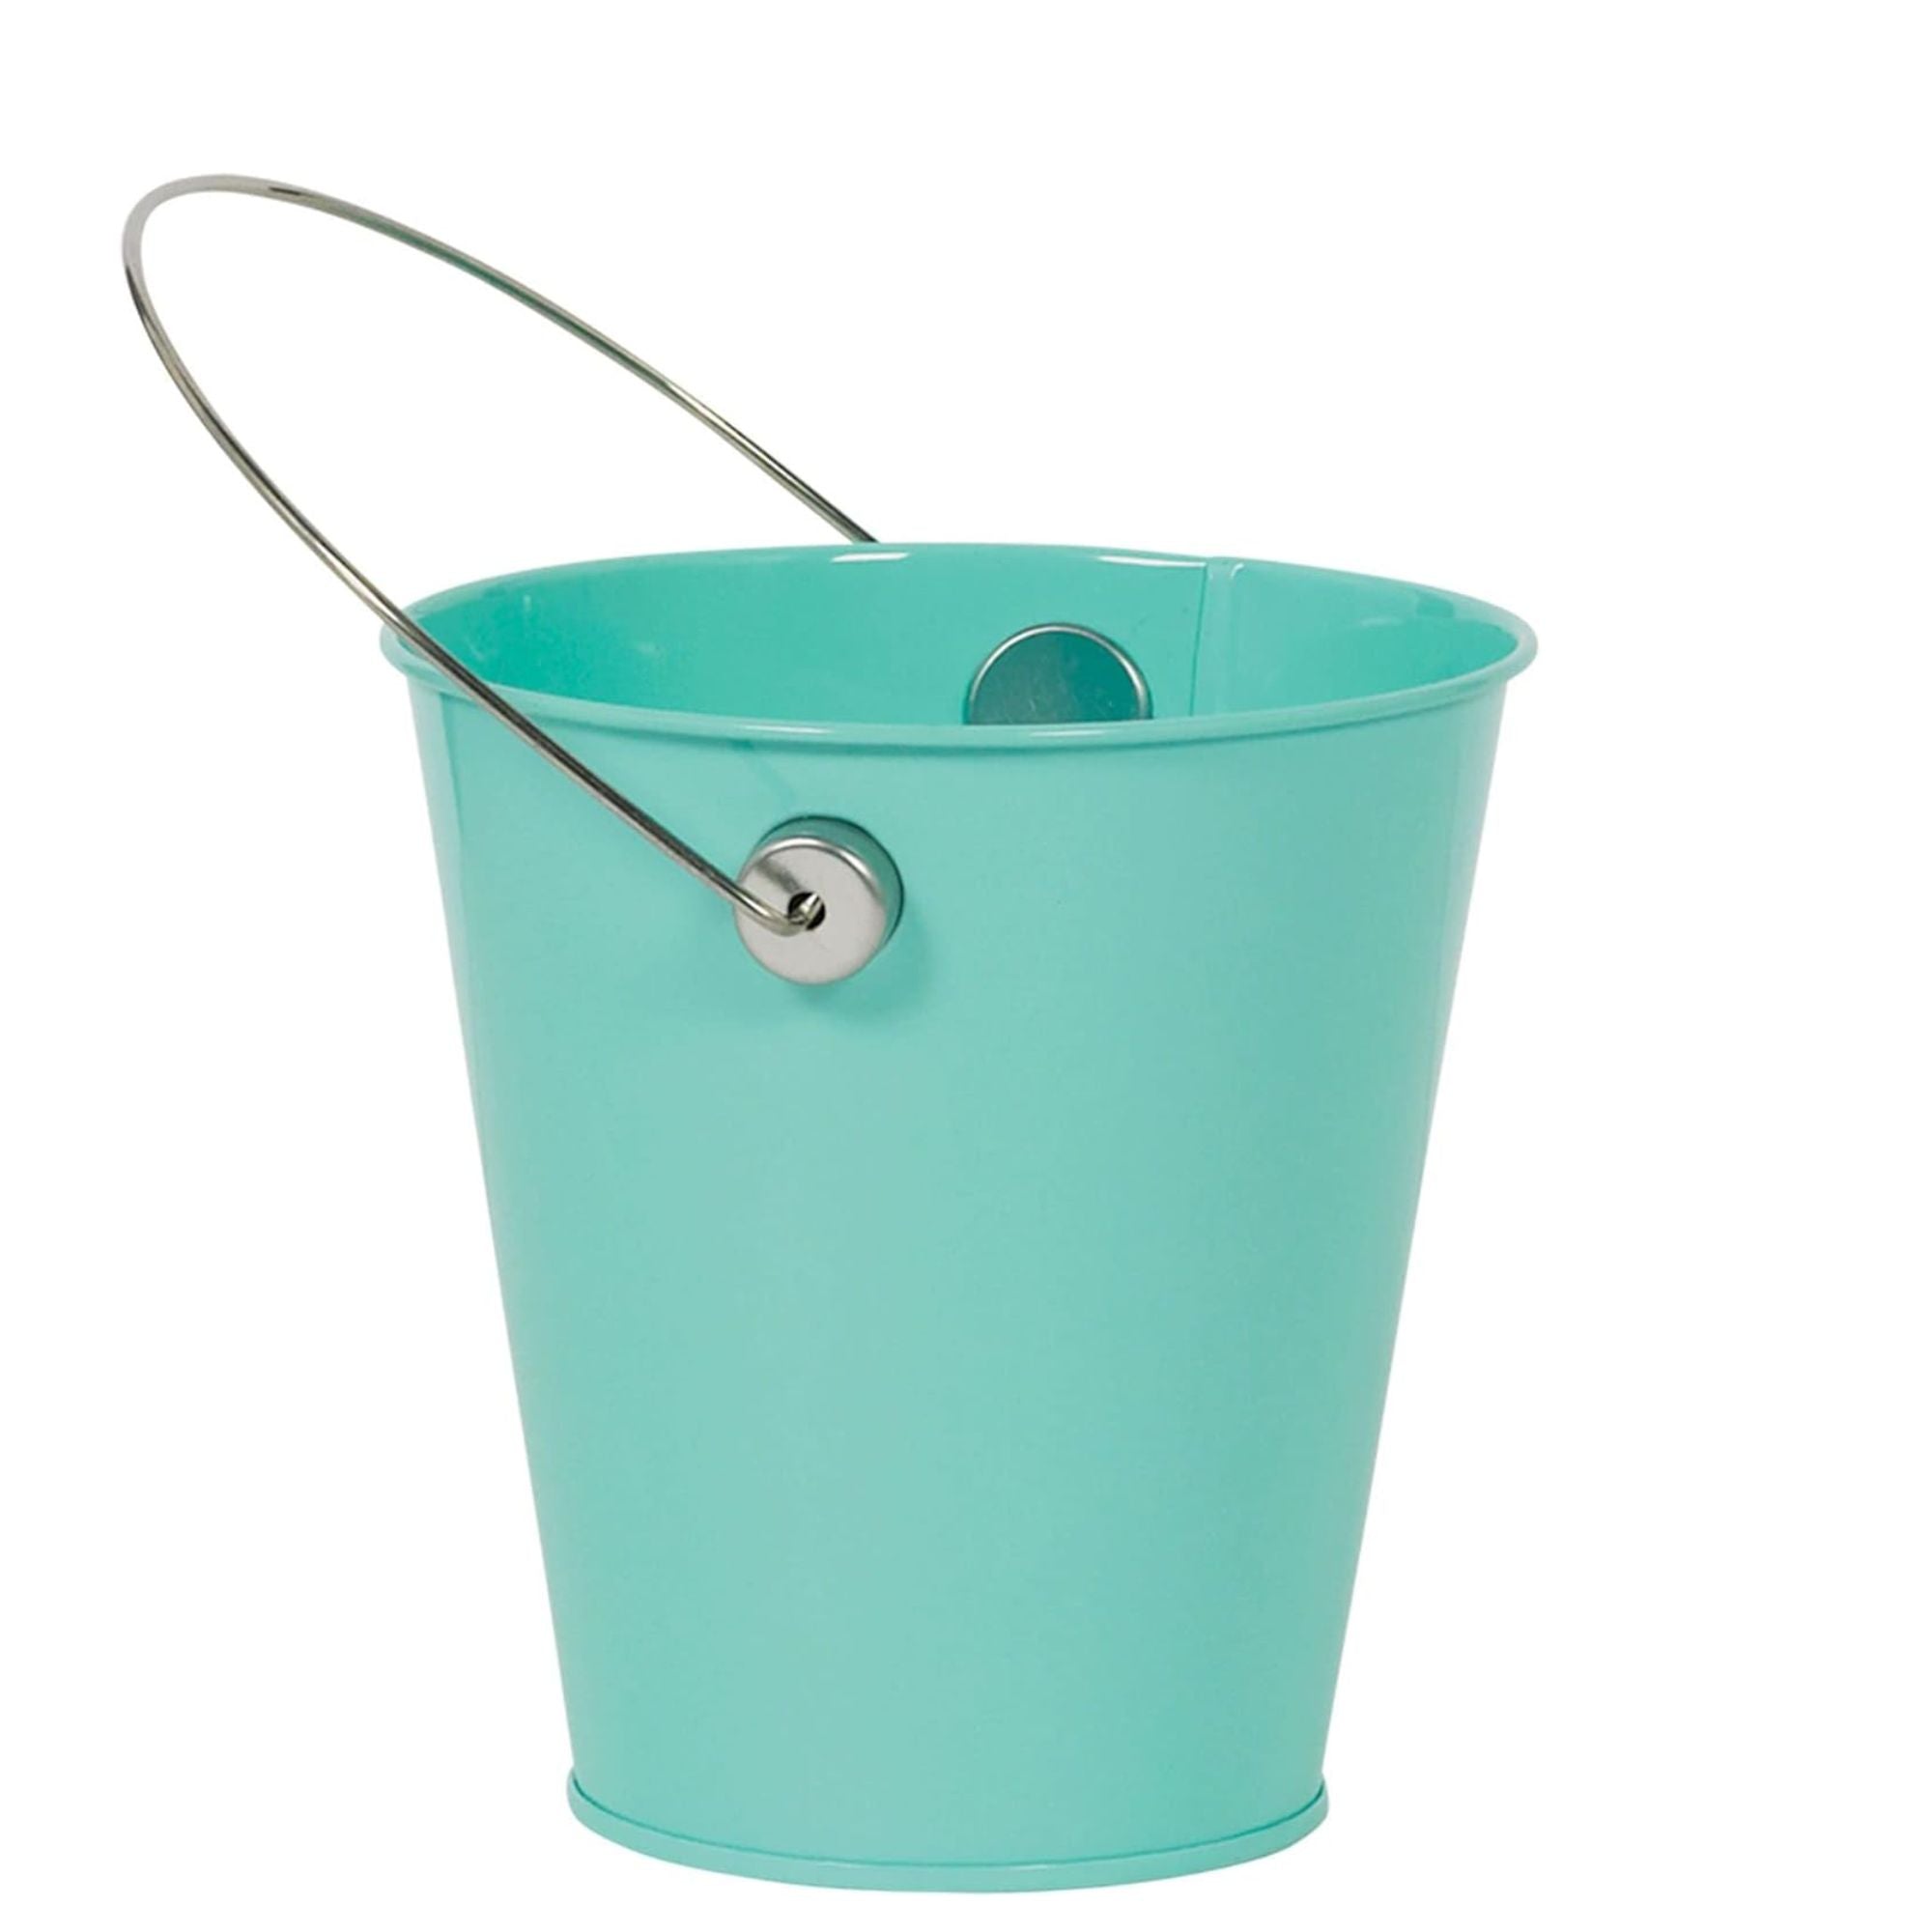 Robins Egg Blue Metal Bucket With Handle